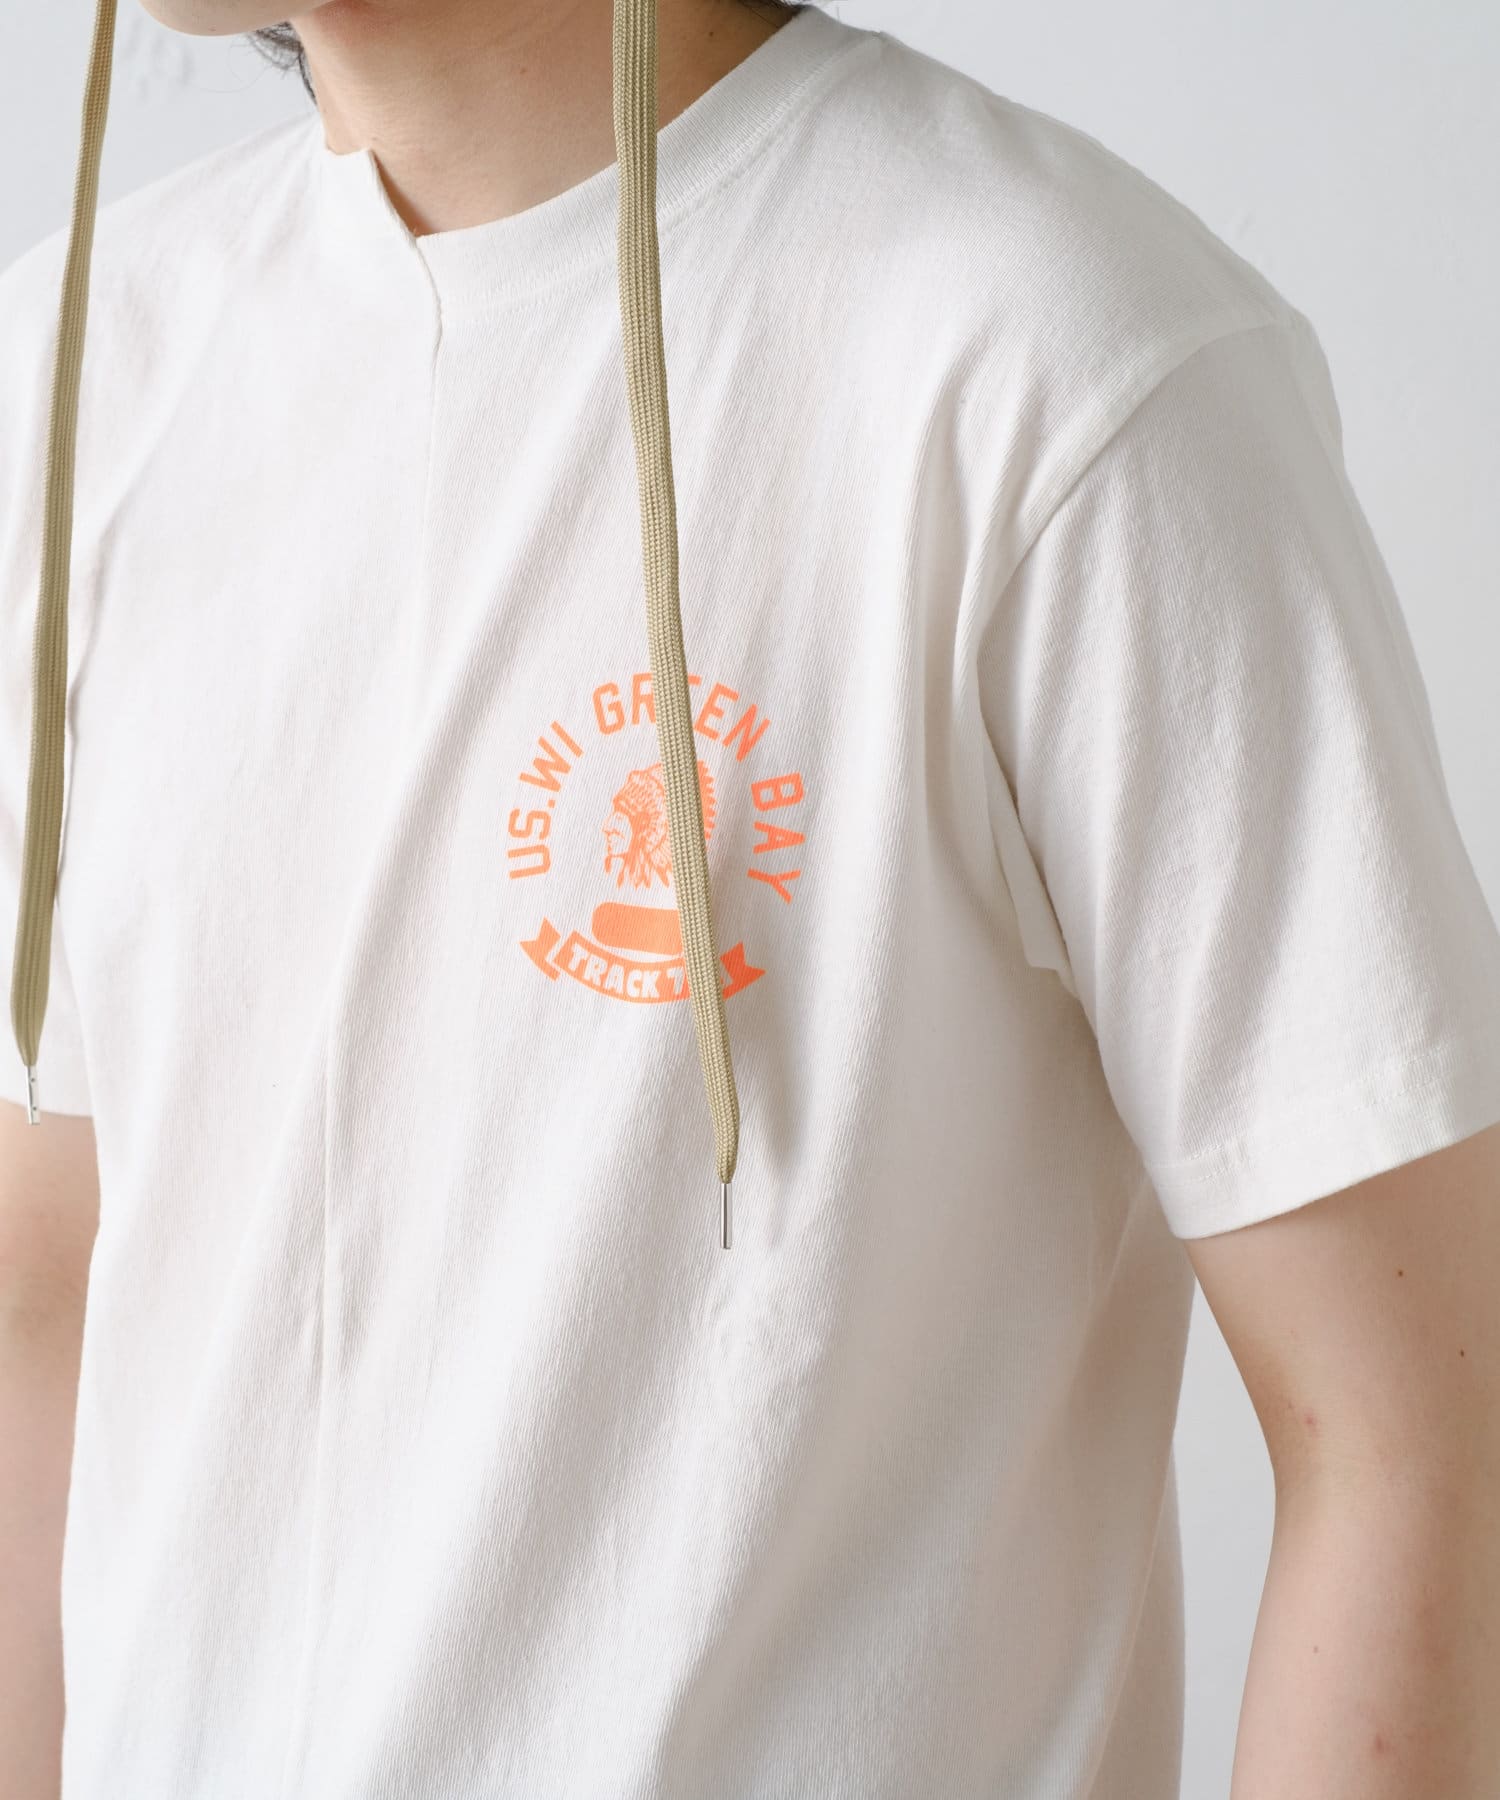 Kastane(カスタネ) 【WHIMSIC】リメイクプリントTシャツ